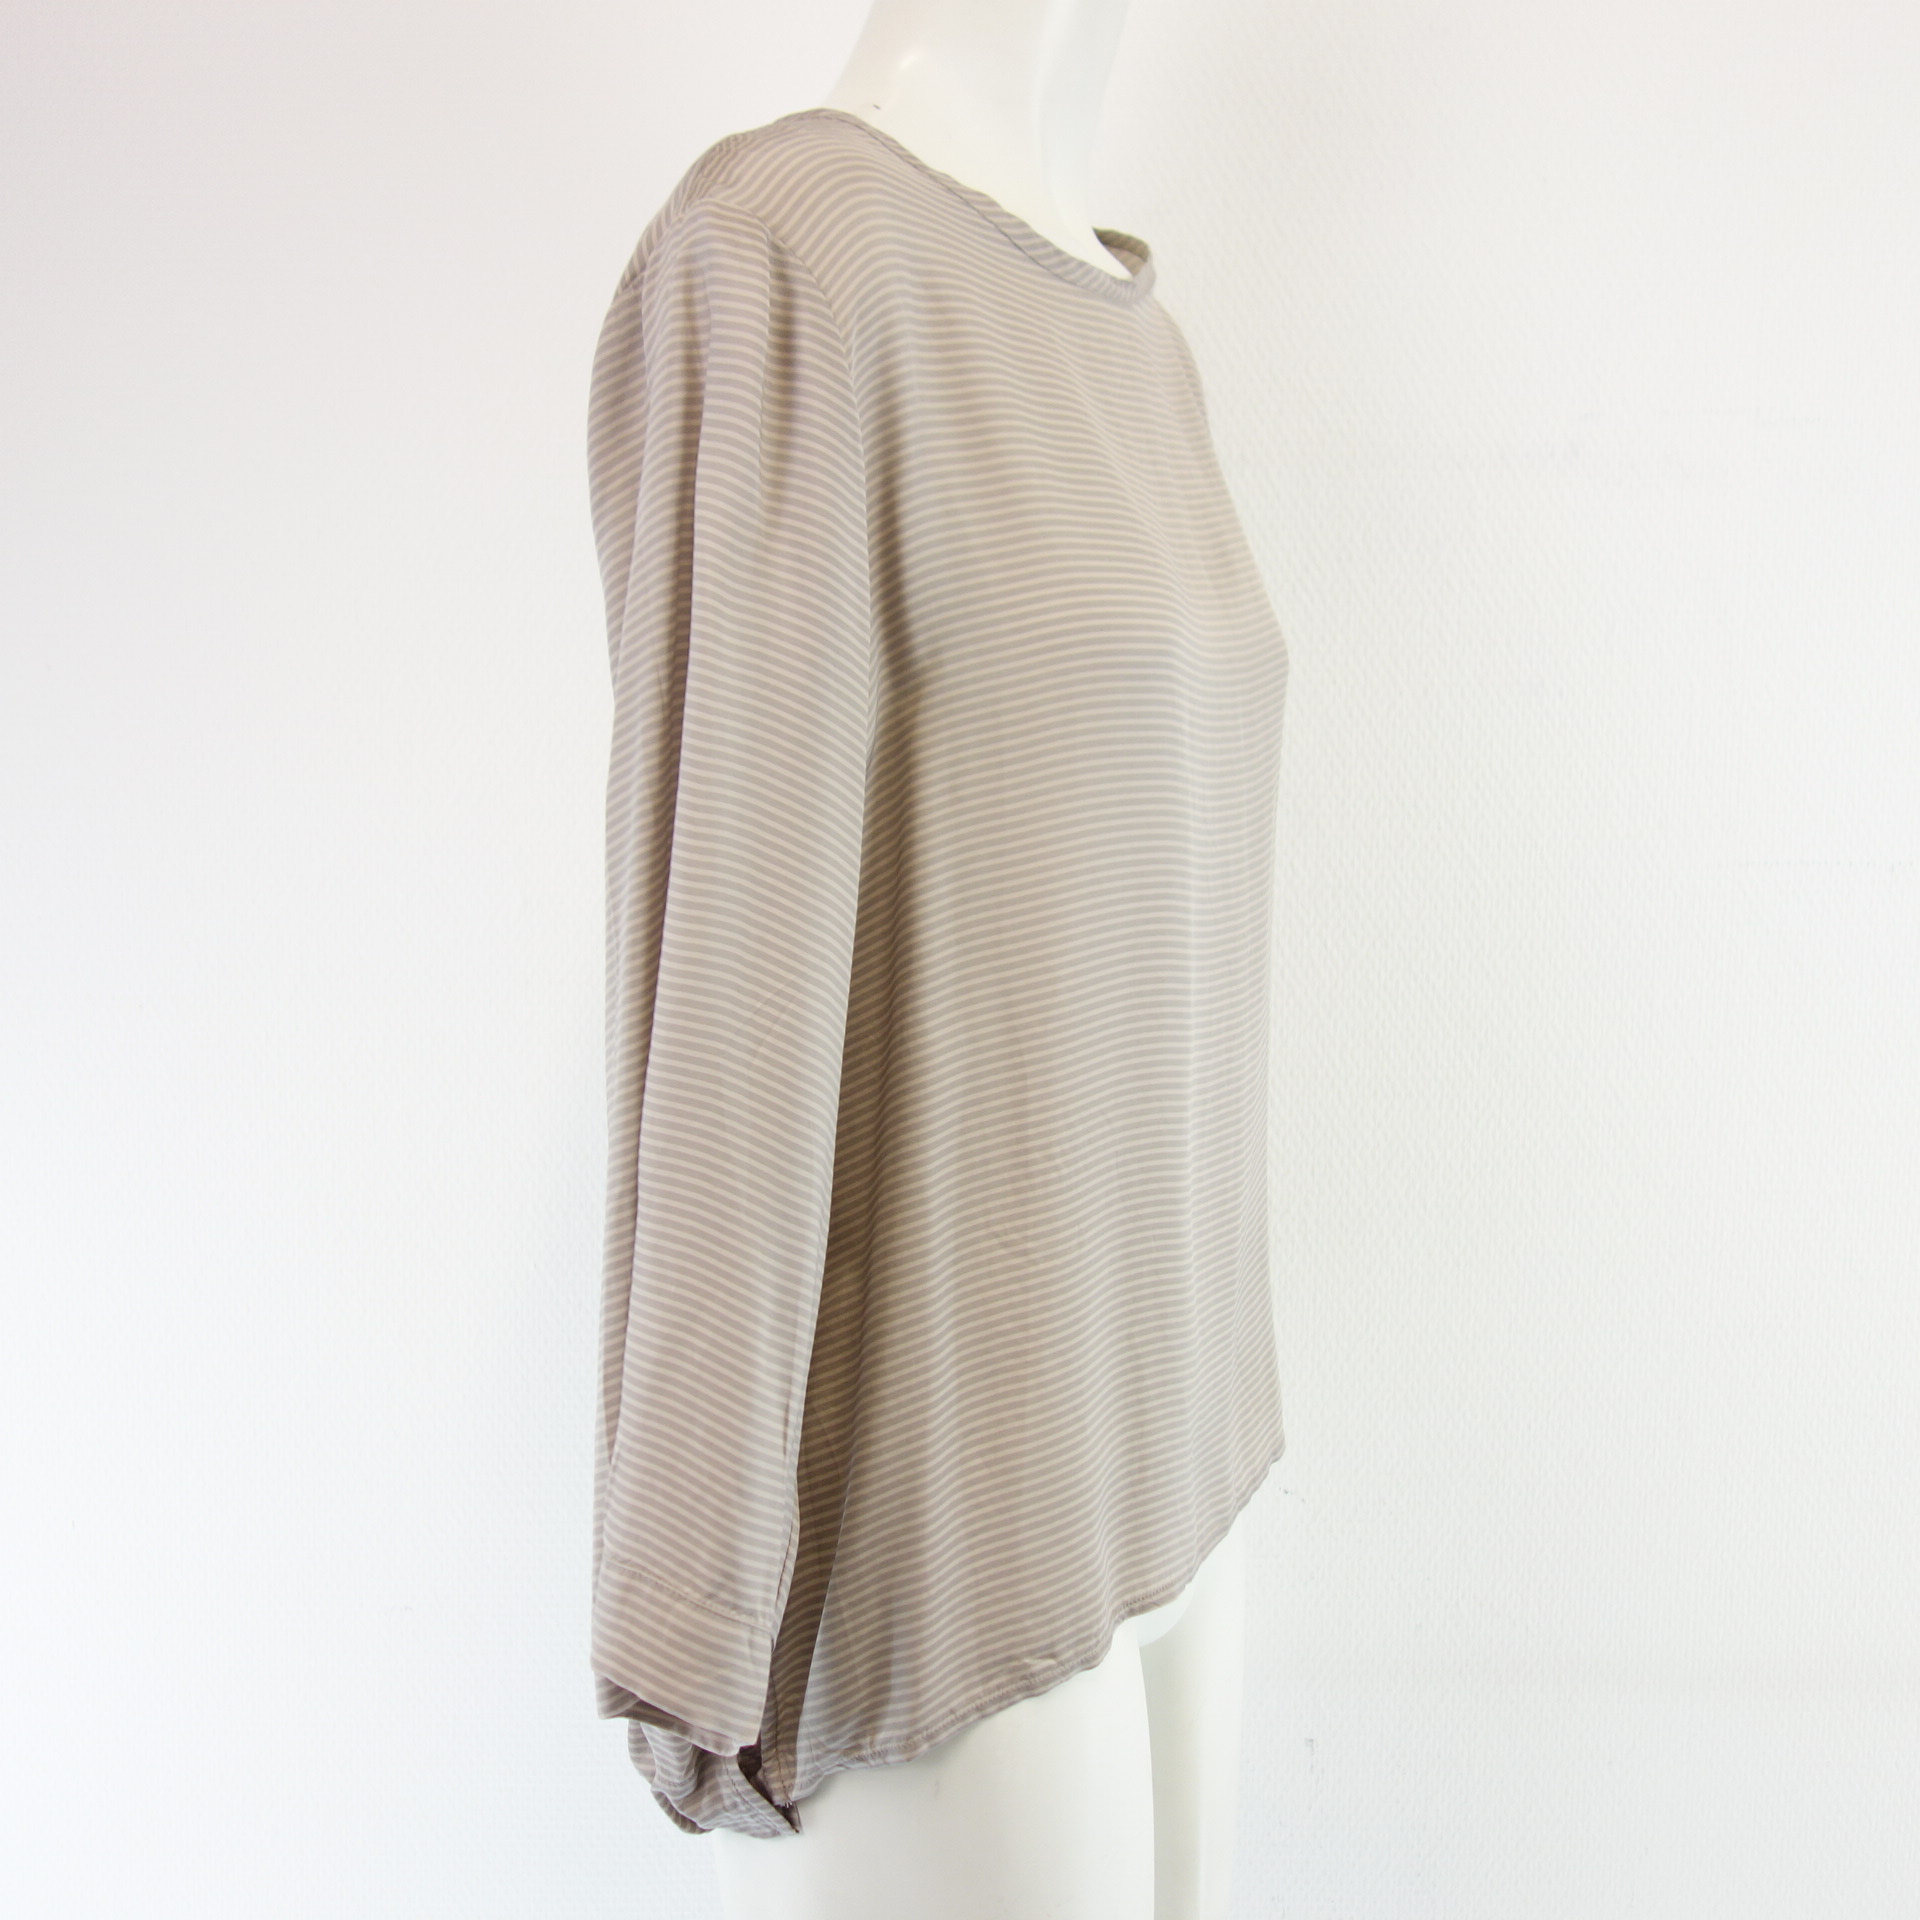 HUMANOID Damen Shirt Bluse Tunika Gestreift Beige Taupe M - L Modell EMMET